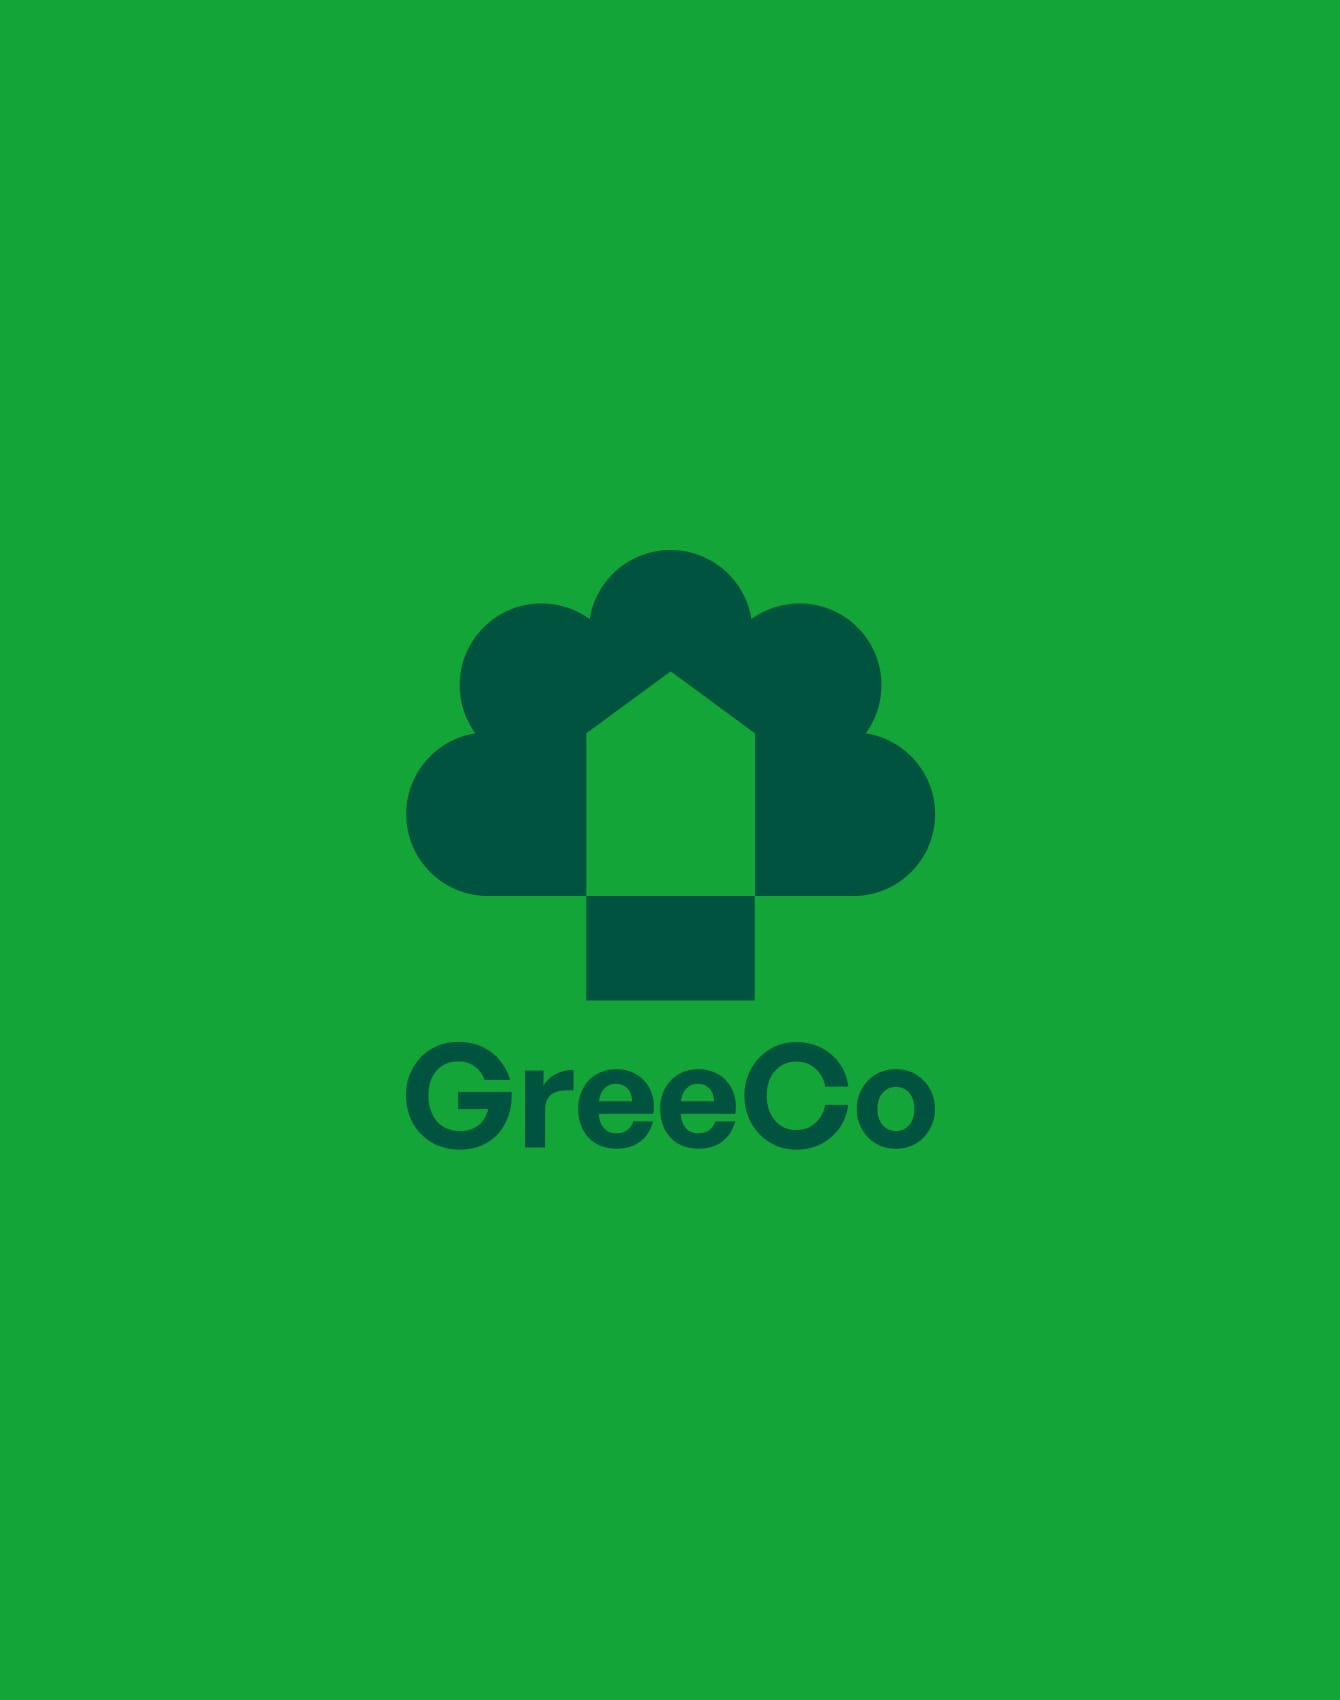 GreeCo logo reference